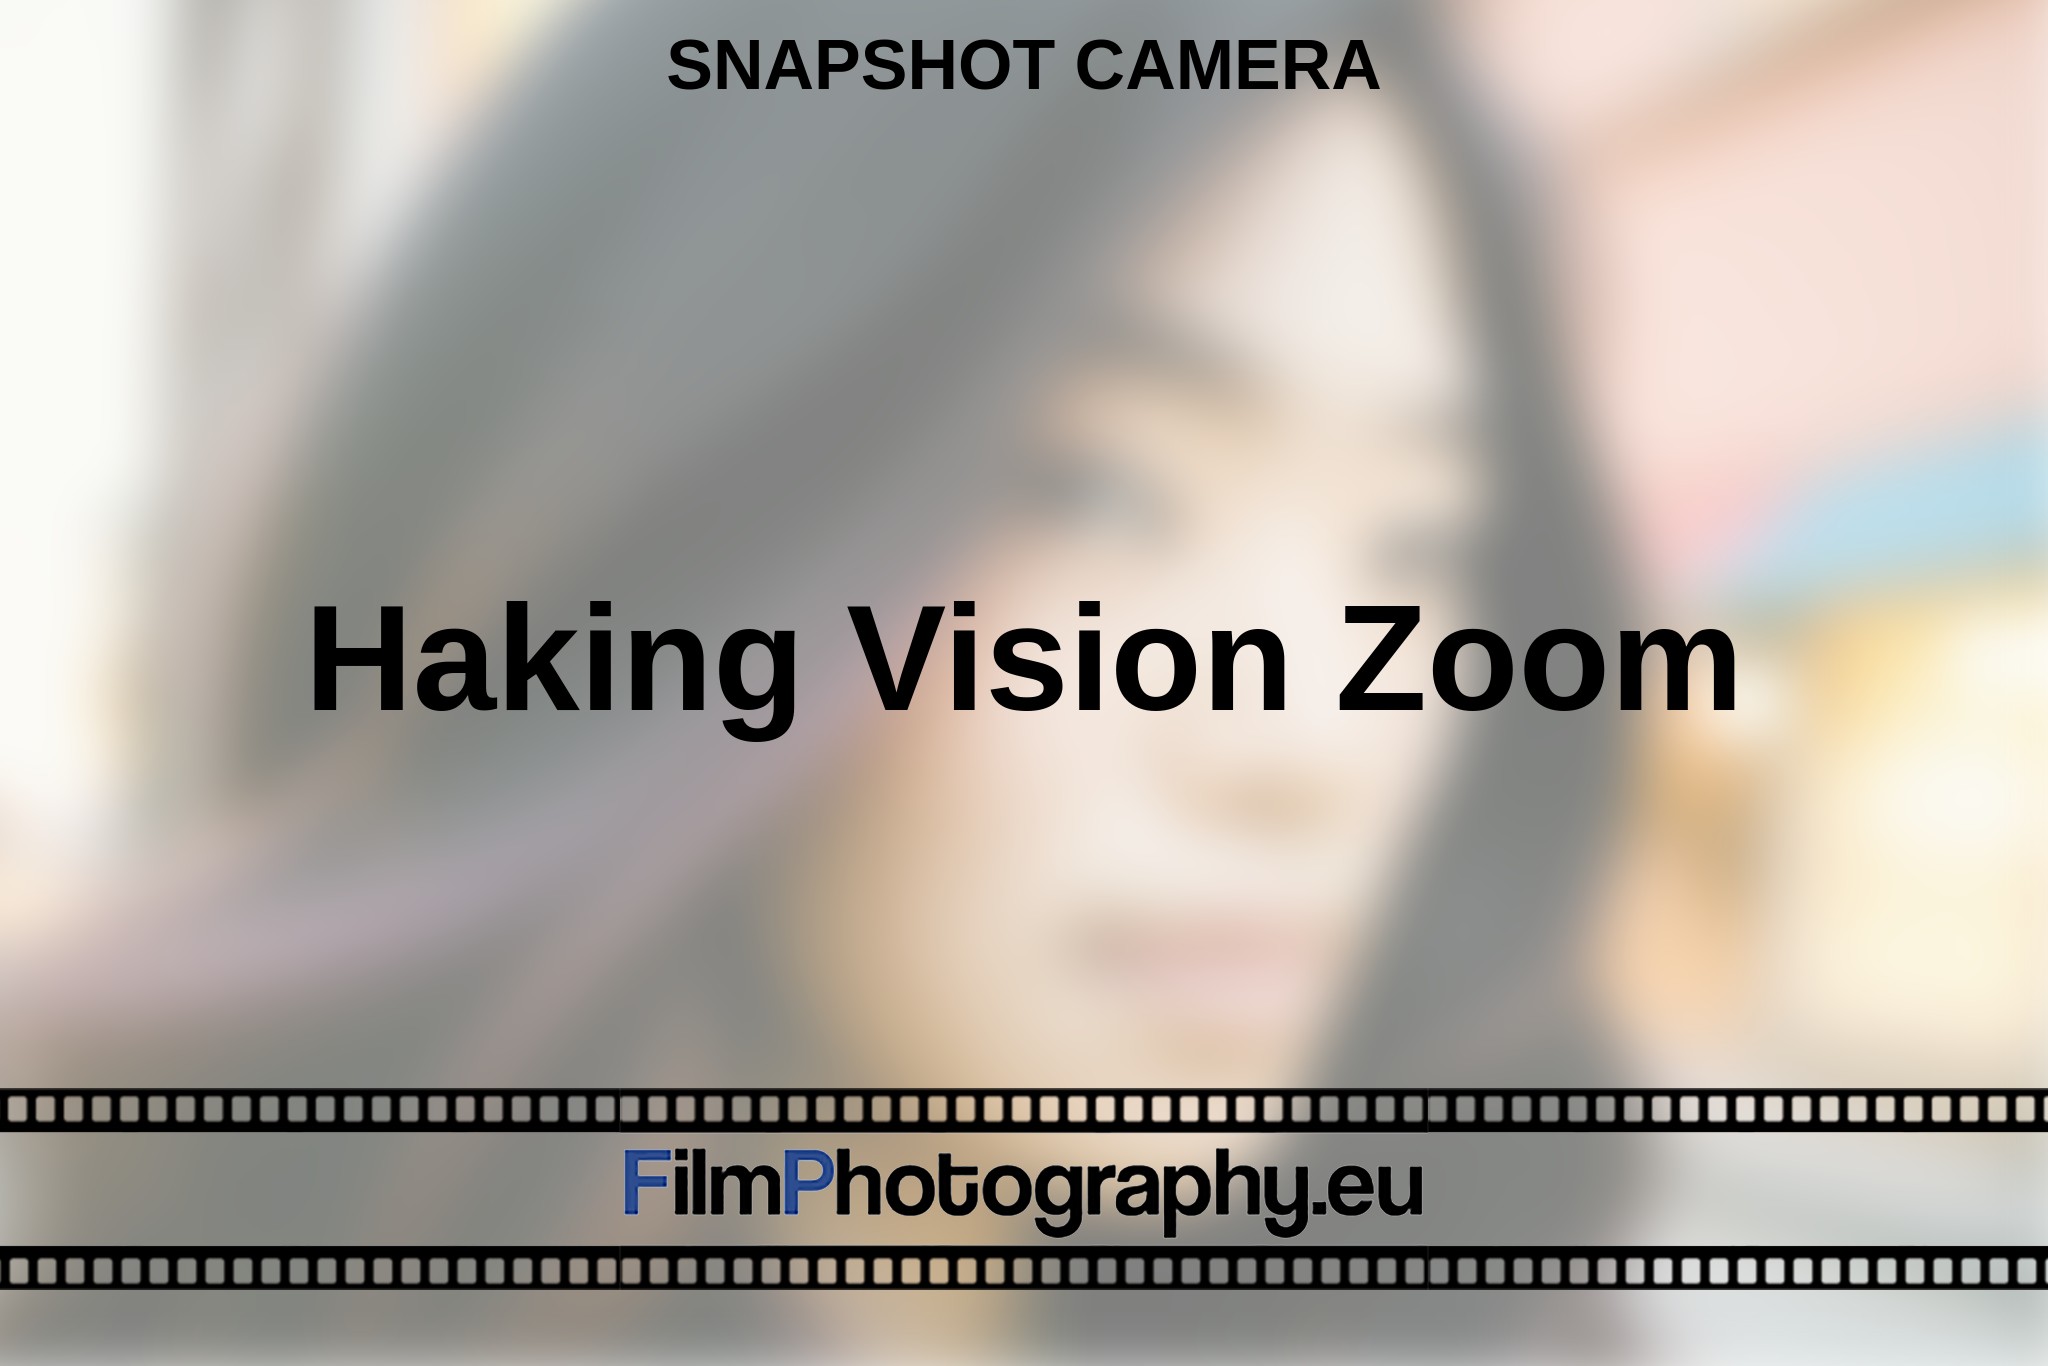 haking-vision-zoom-snapshot-camera-en-bnv.jpg